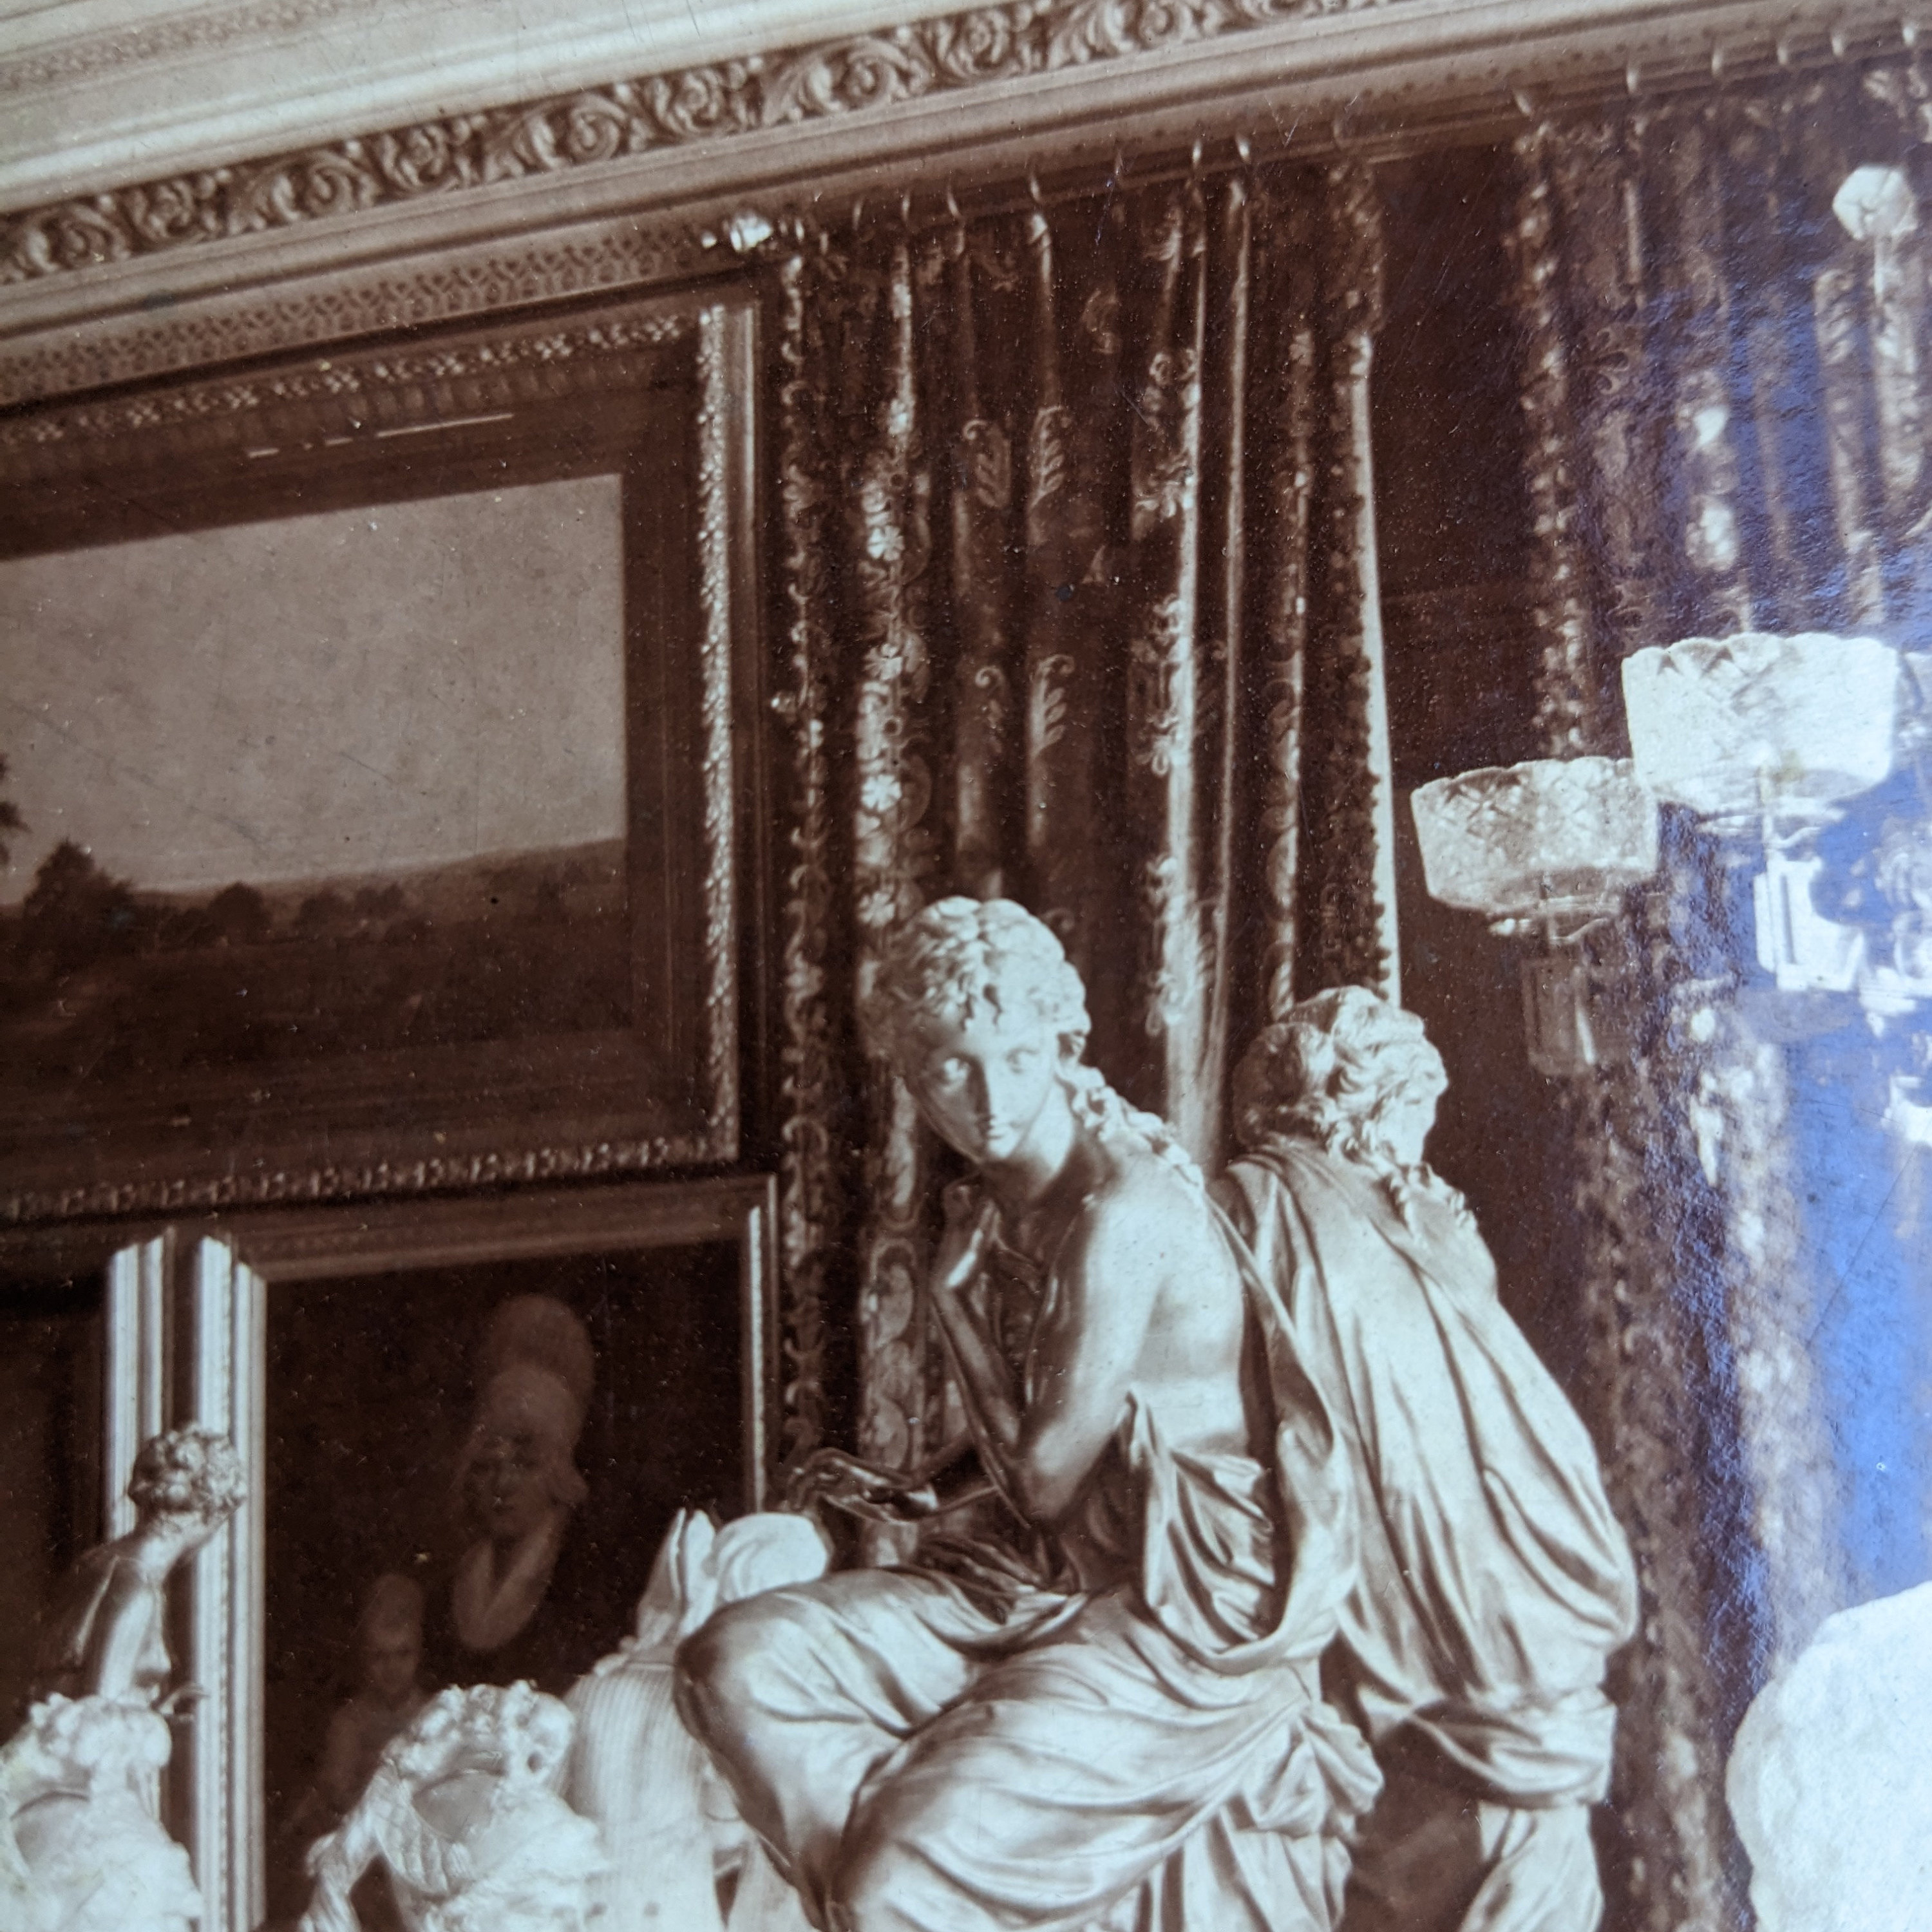 Auguste Escoffier: Memories of My Life